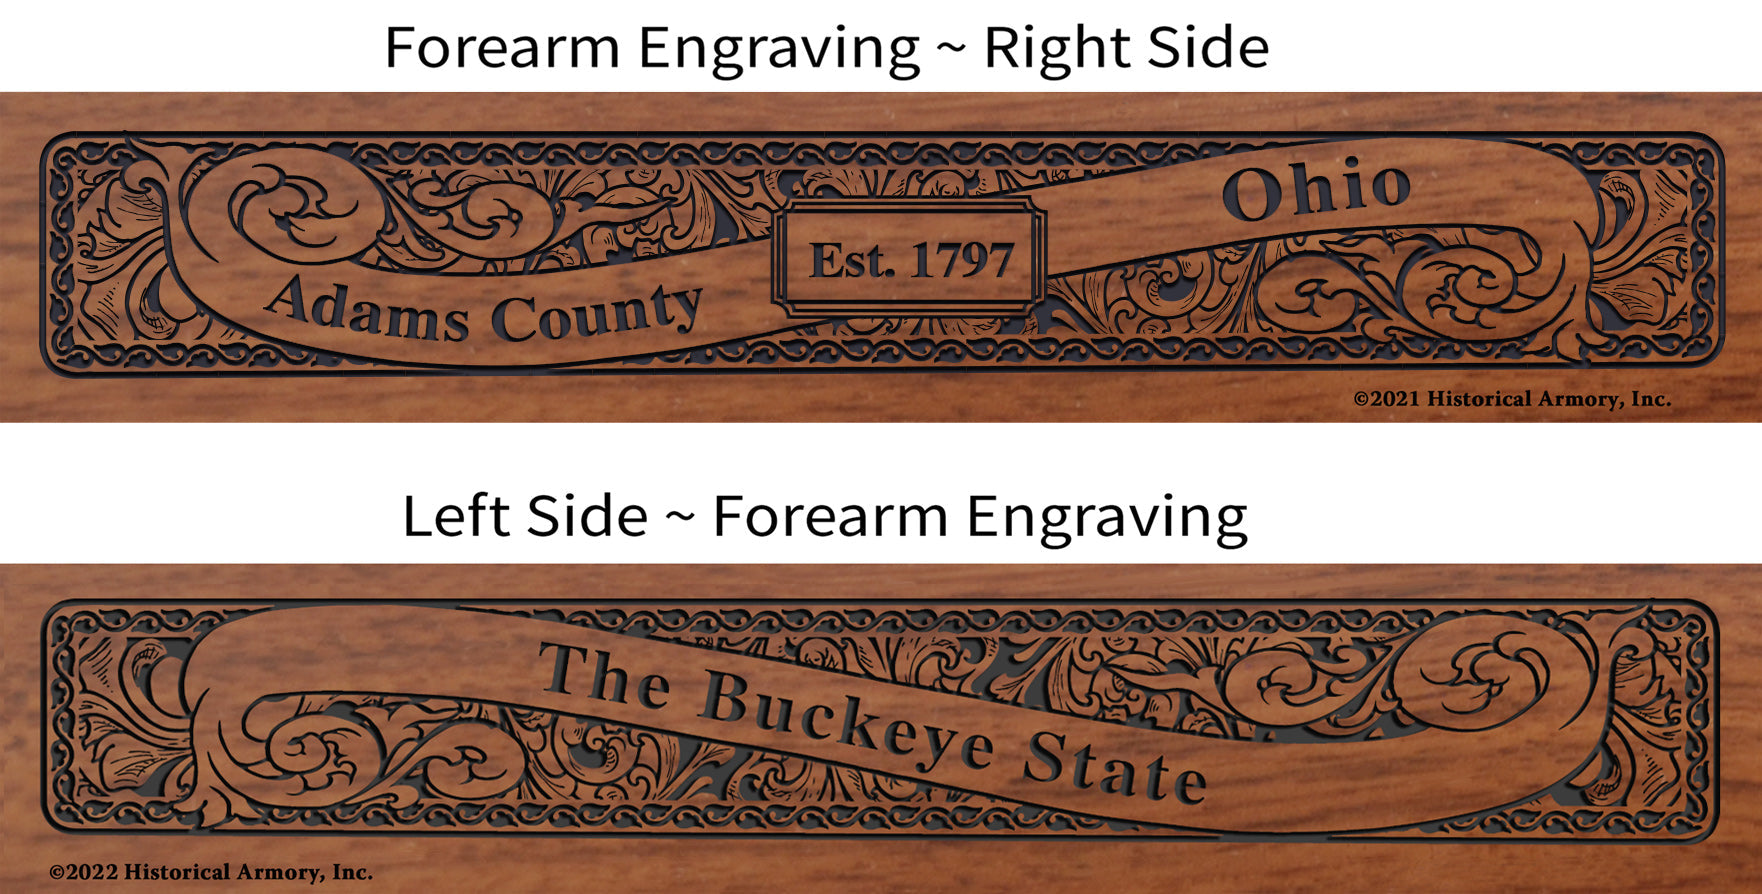 Adams County Ohio Engraved Rifle Forearm